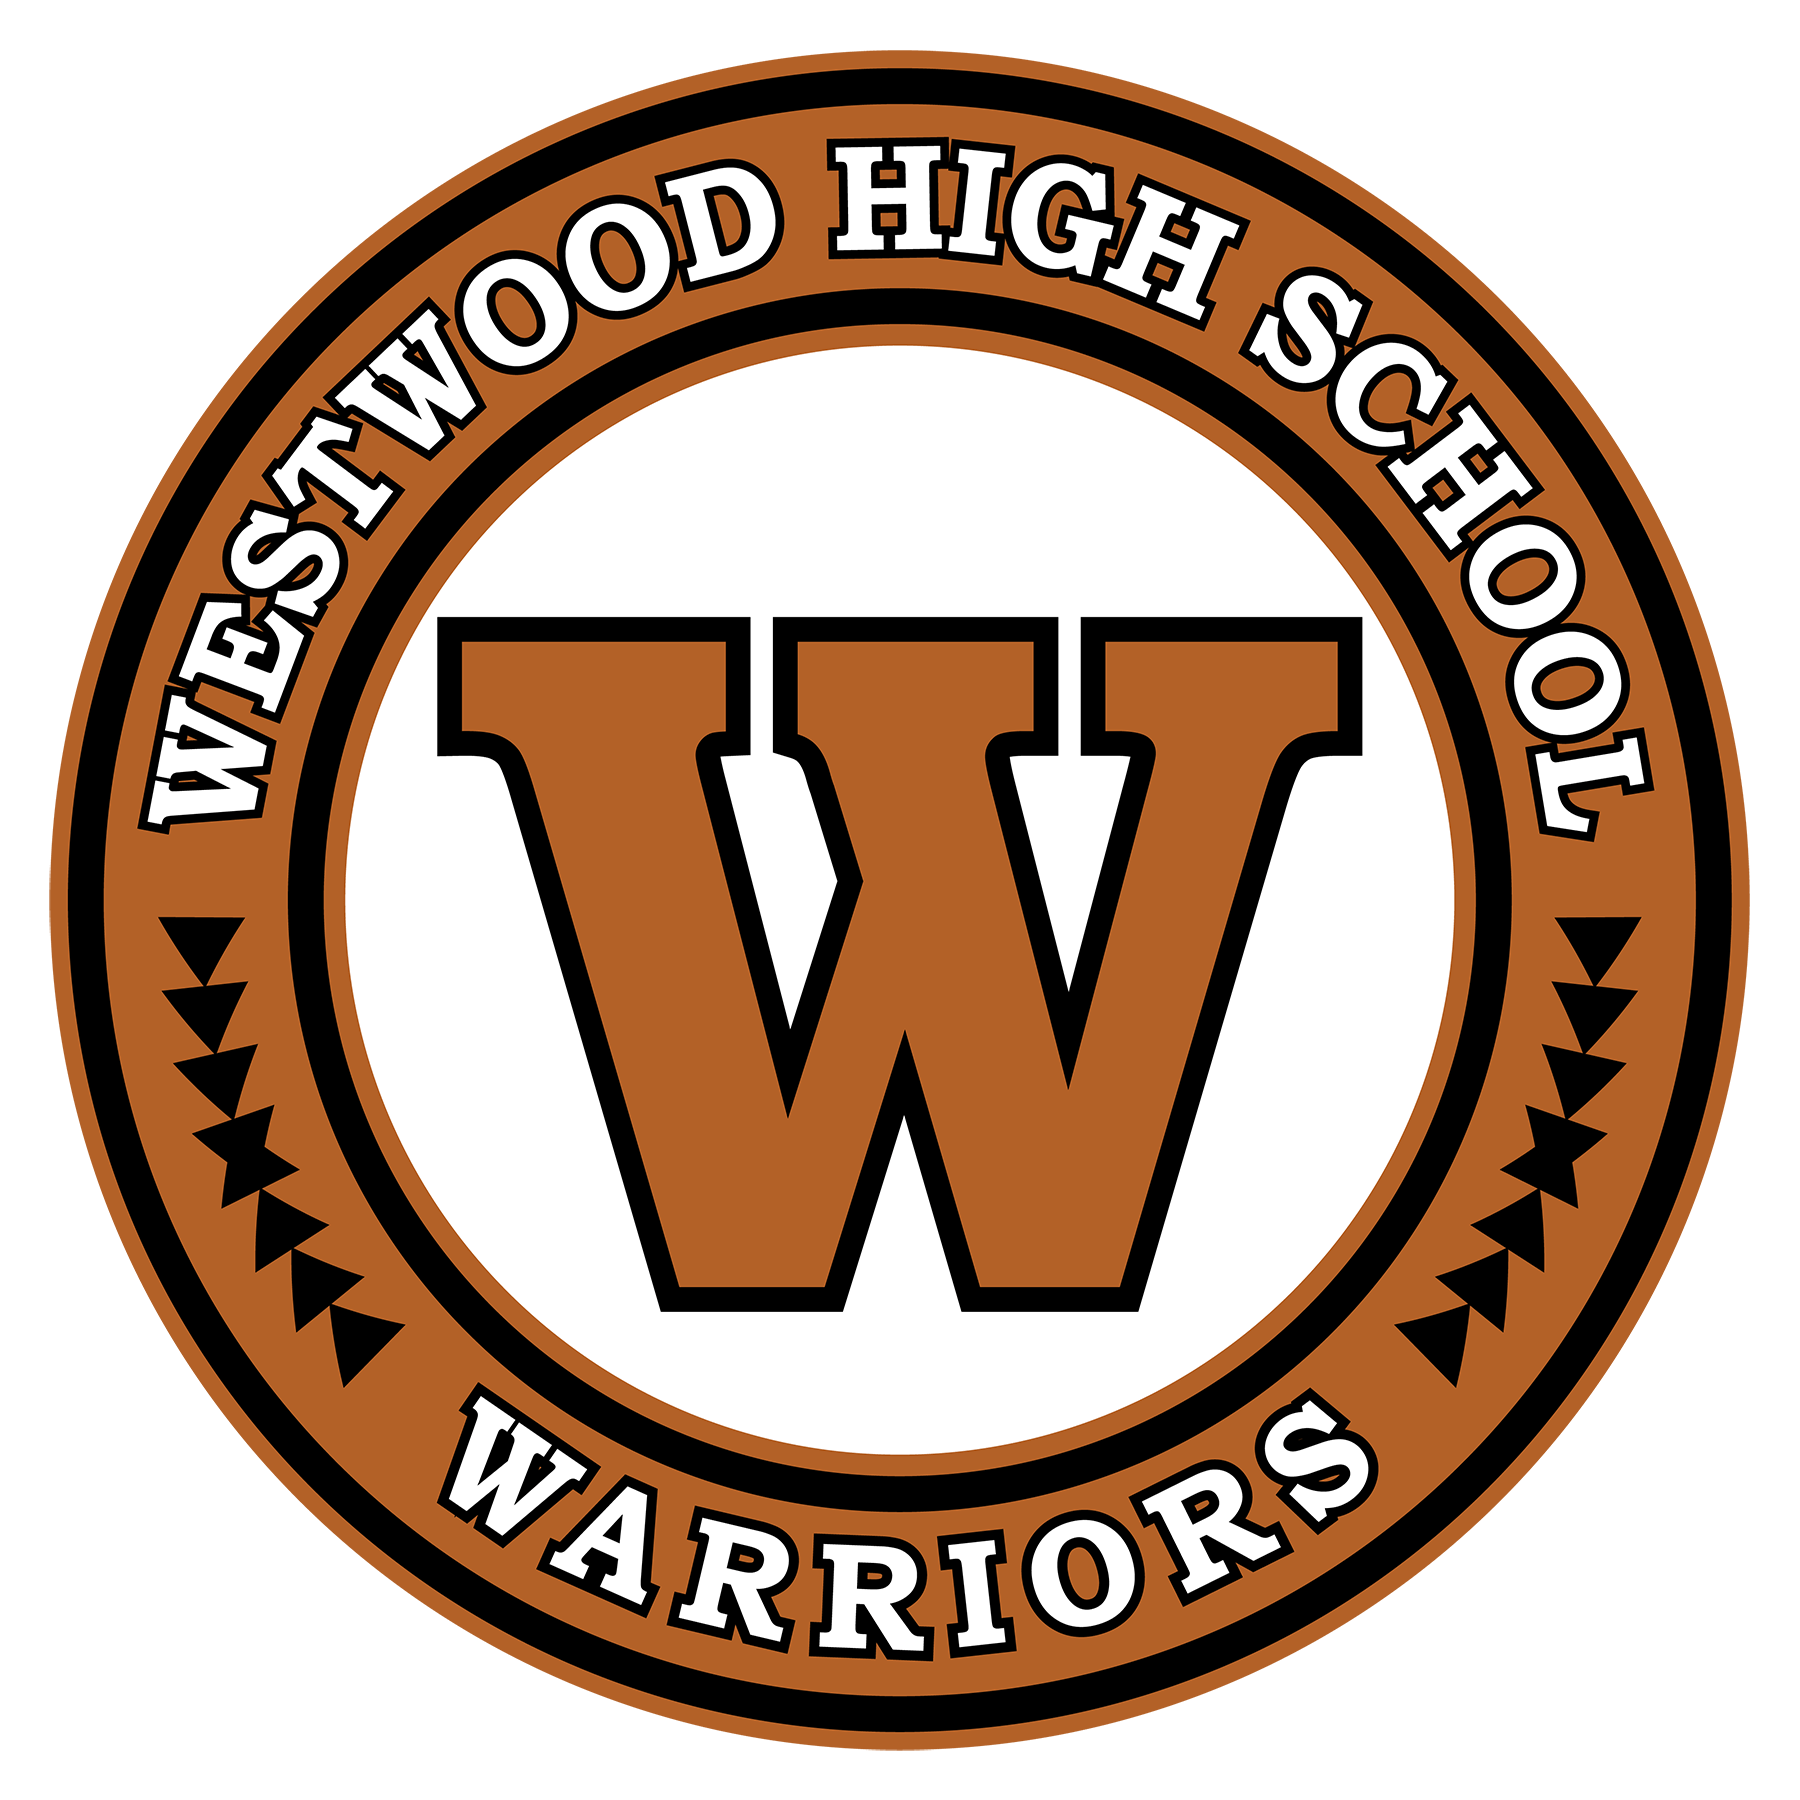 Westwood High School logo - Warriors